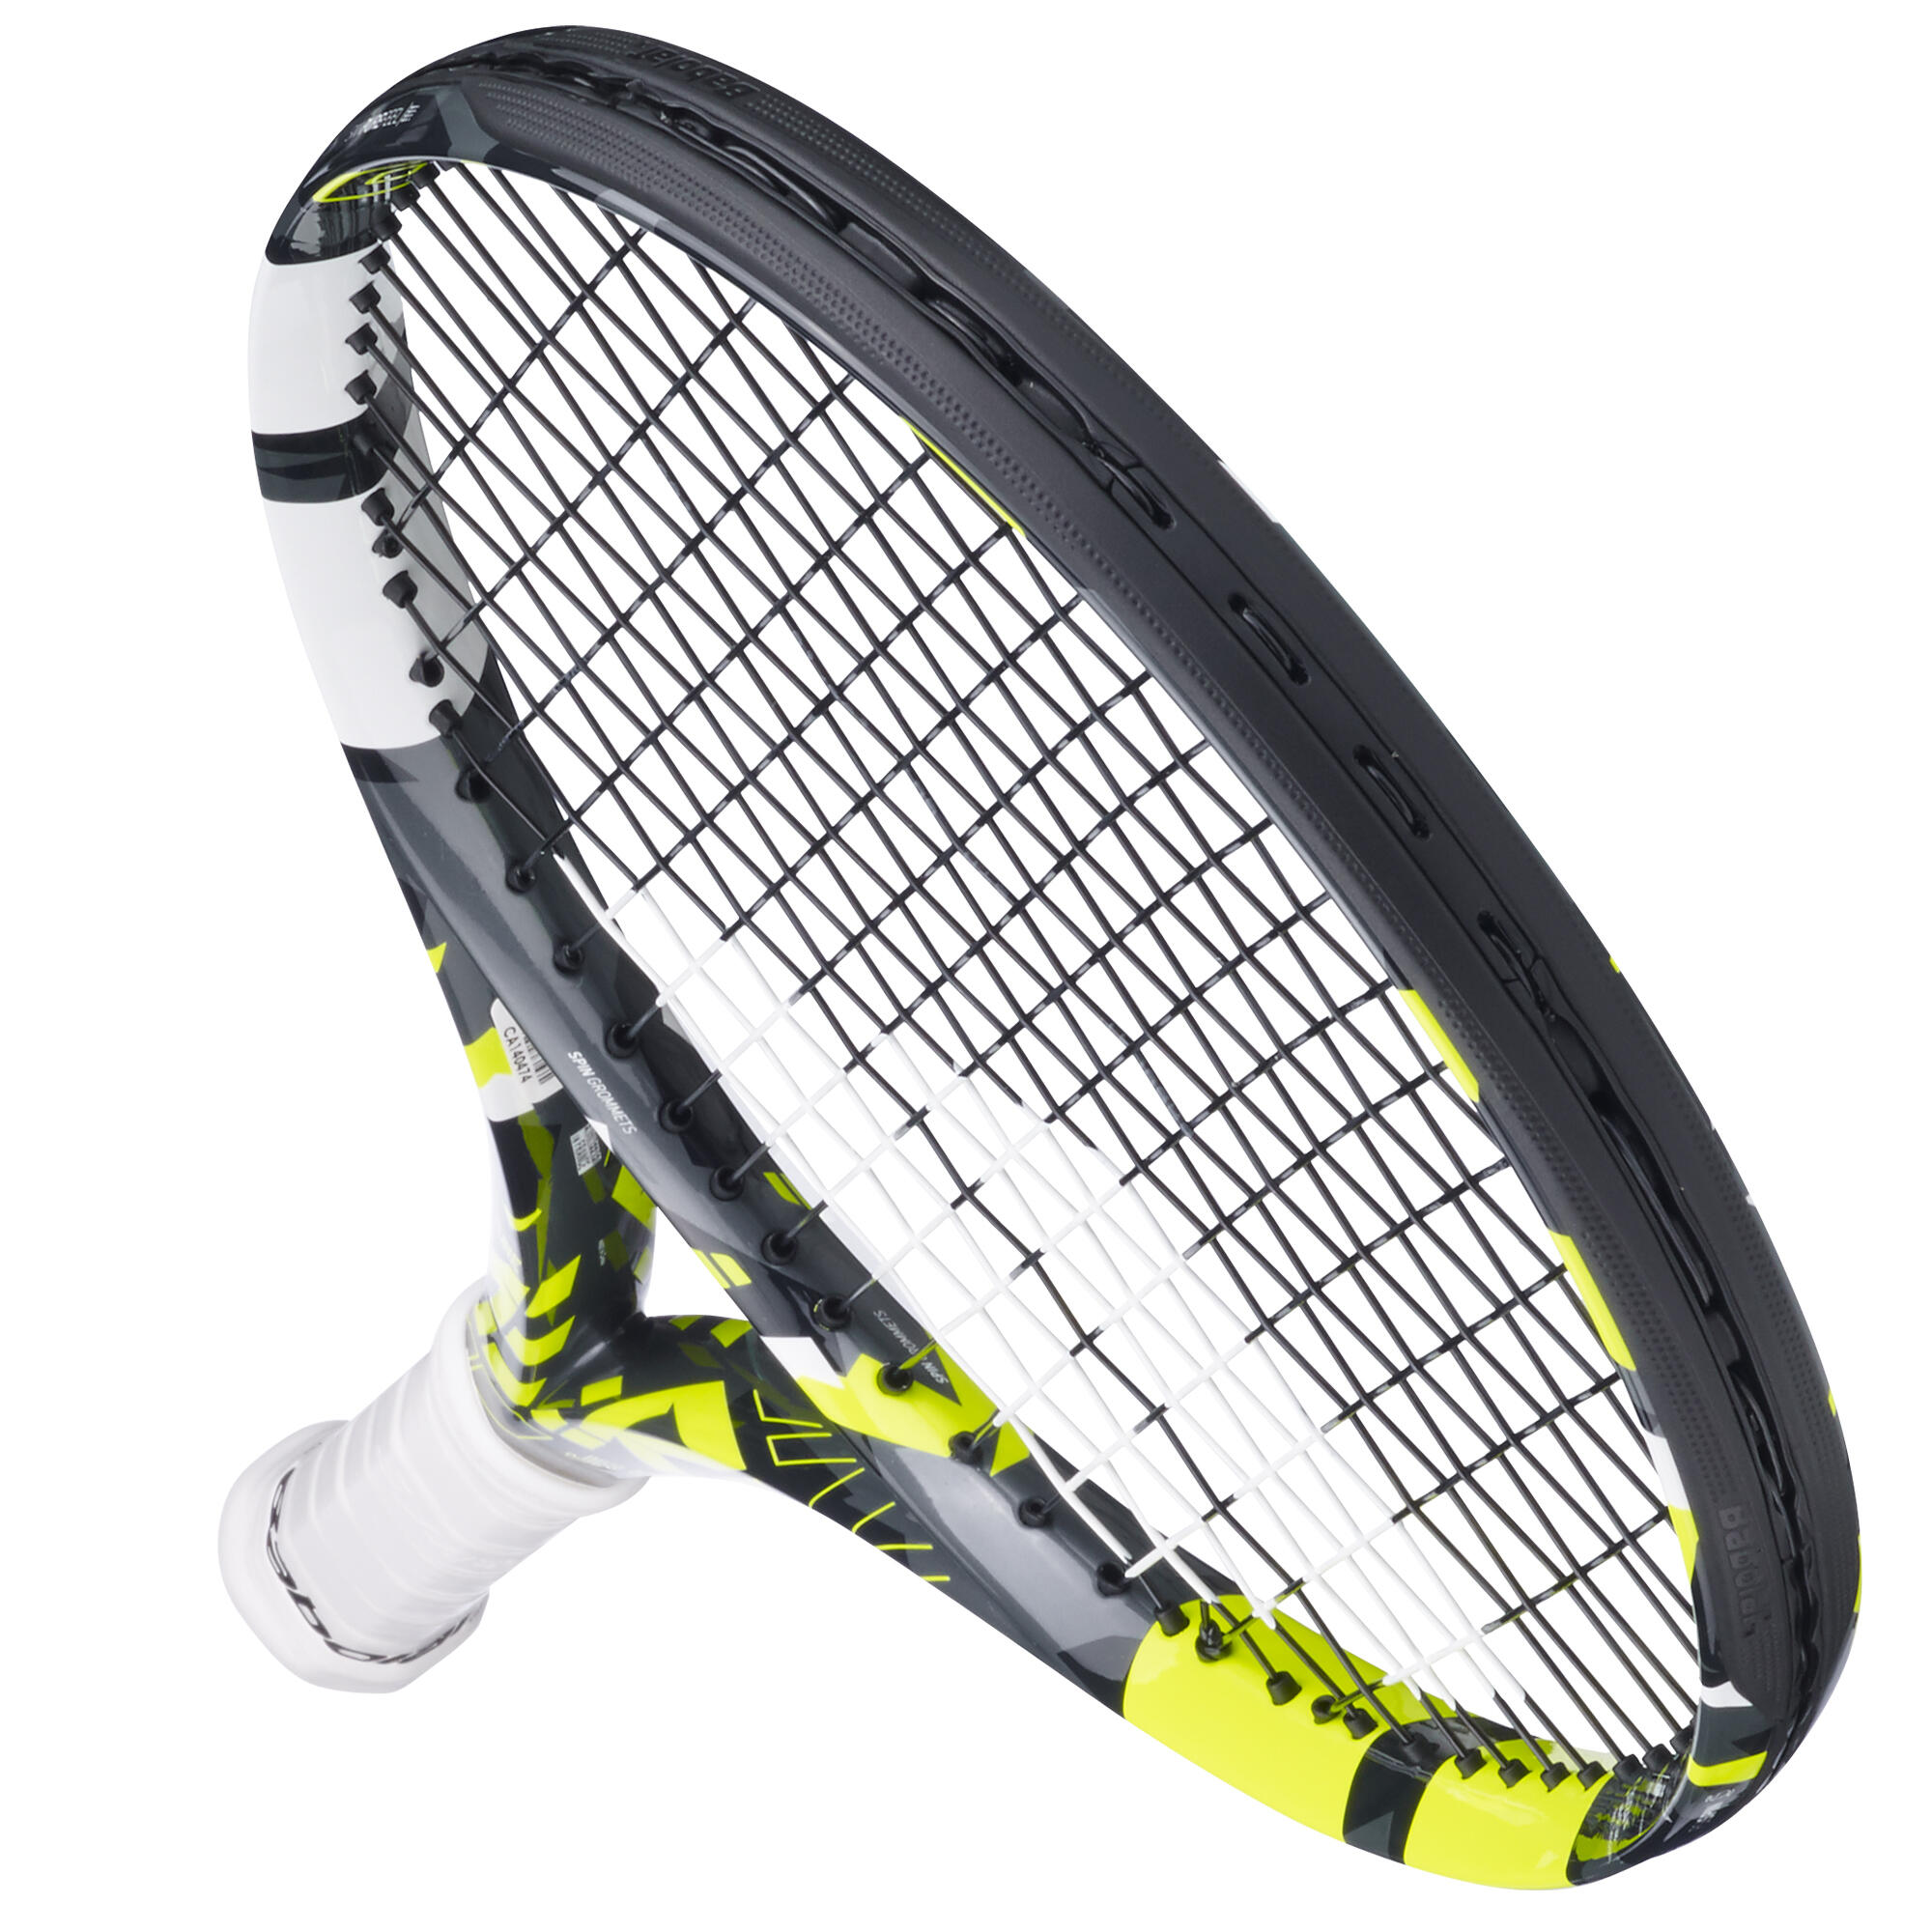 Pure Aero 26 Kids' Tennis Racket - Black/Yellow 7/7